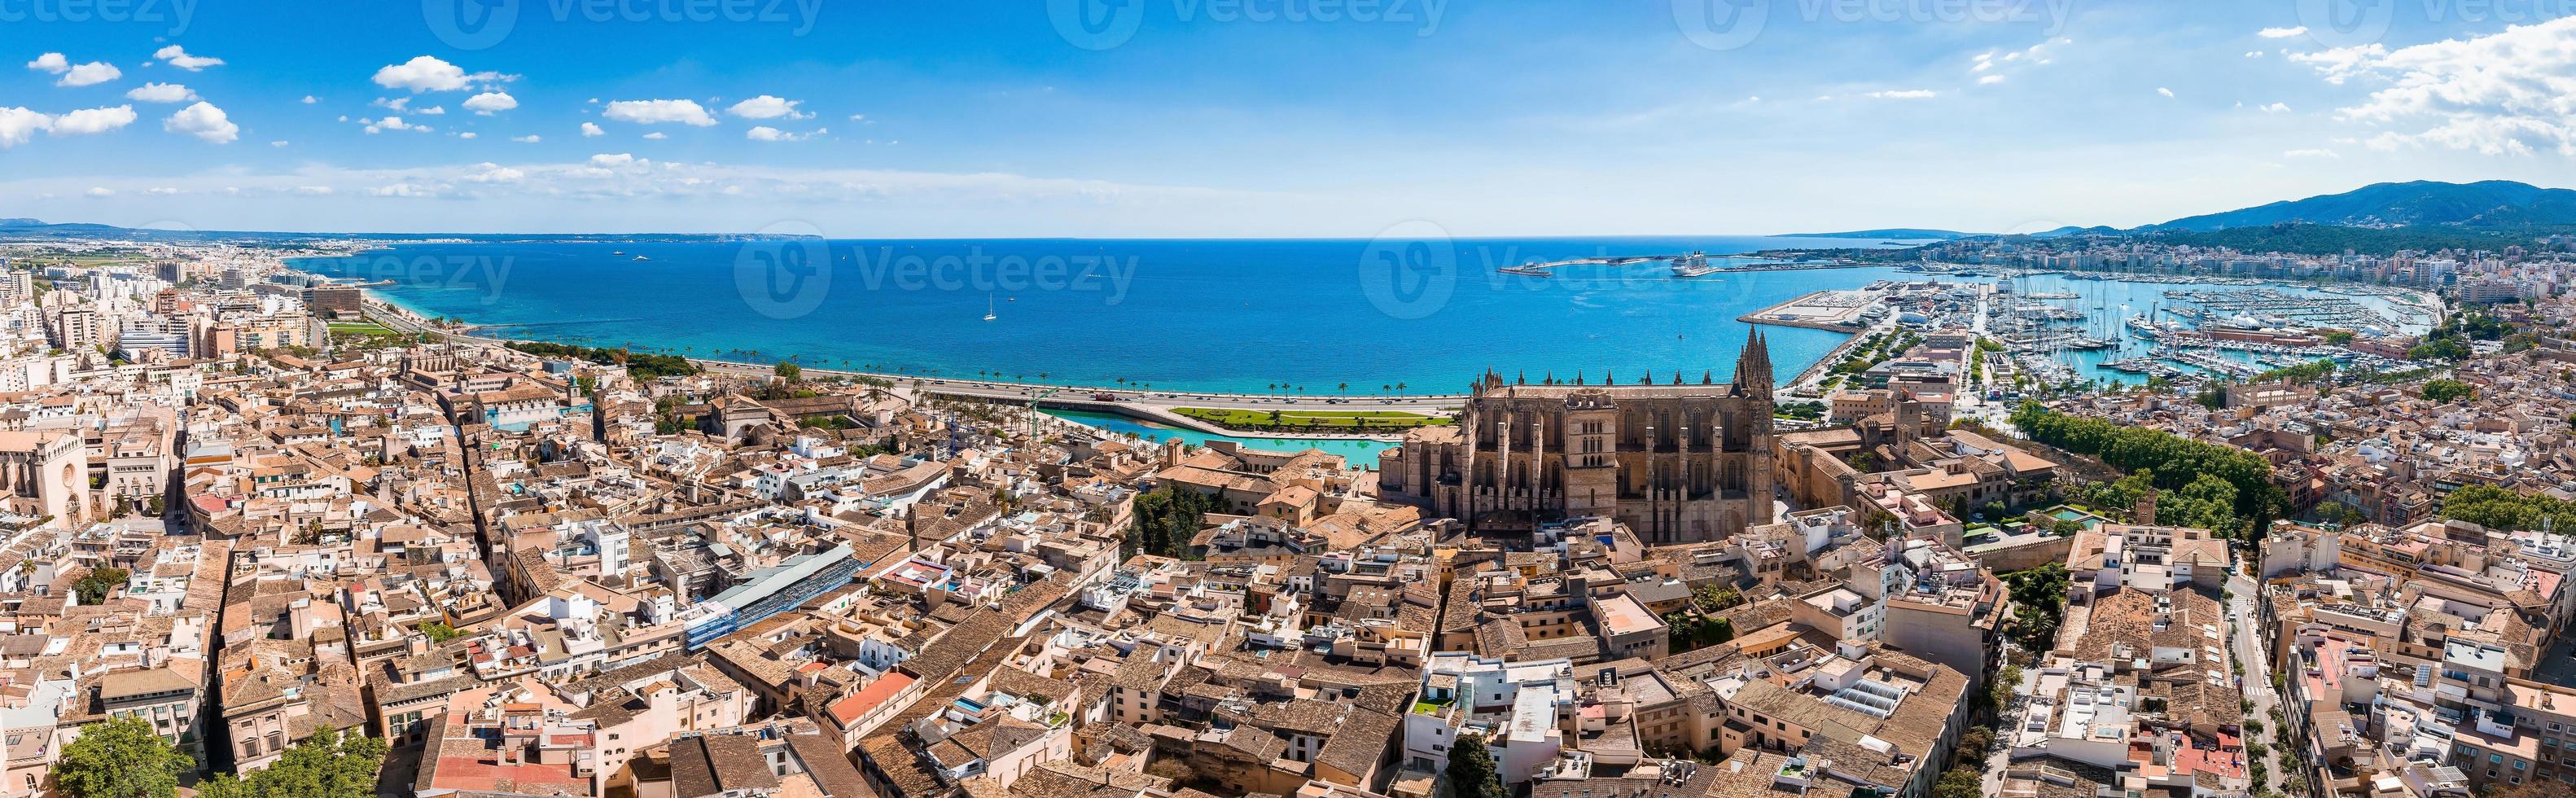 luchtfoto van de hoofdstad van mallorca - palma de mallorca in spanje. foto